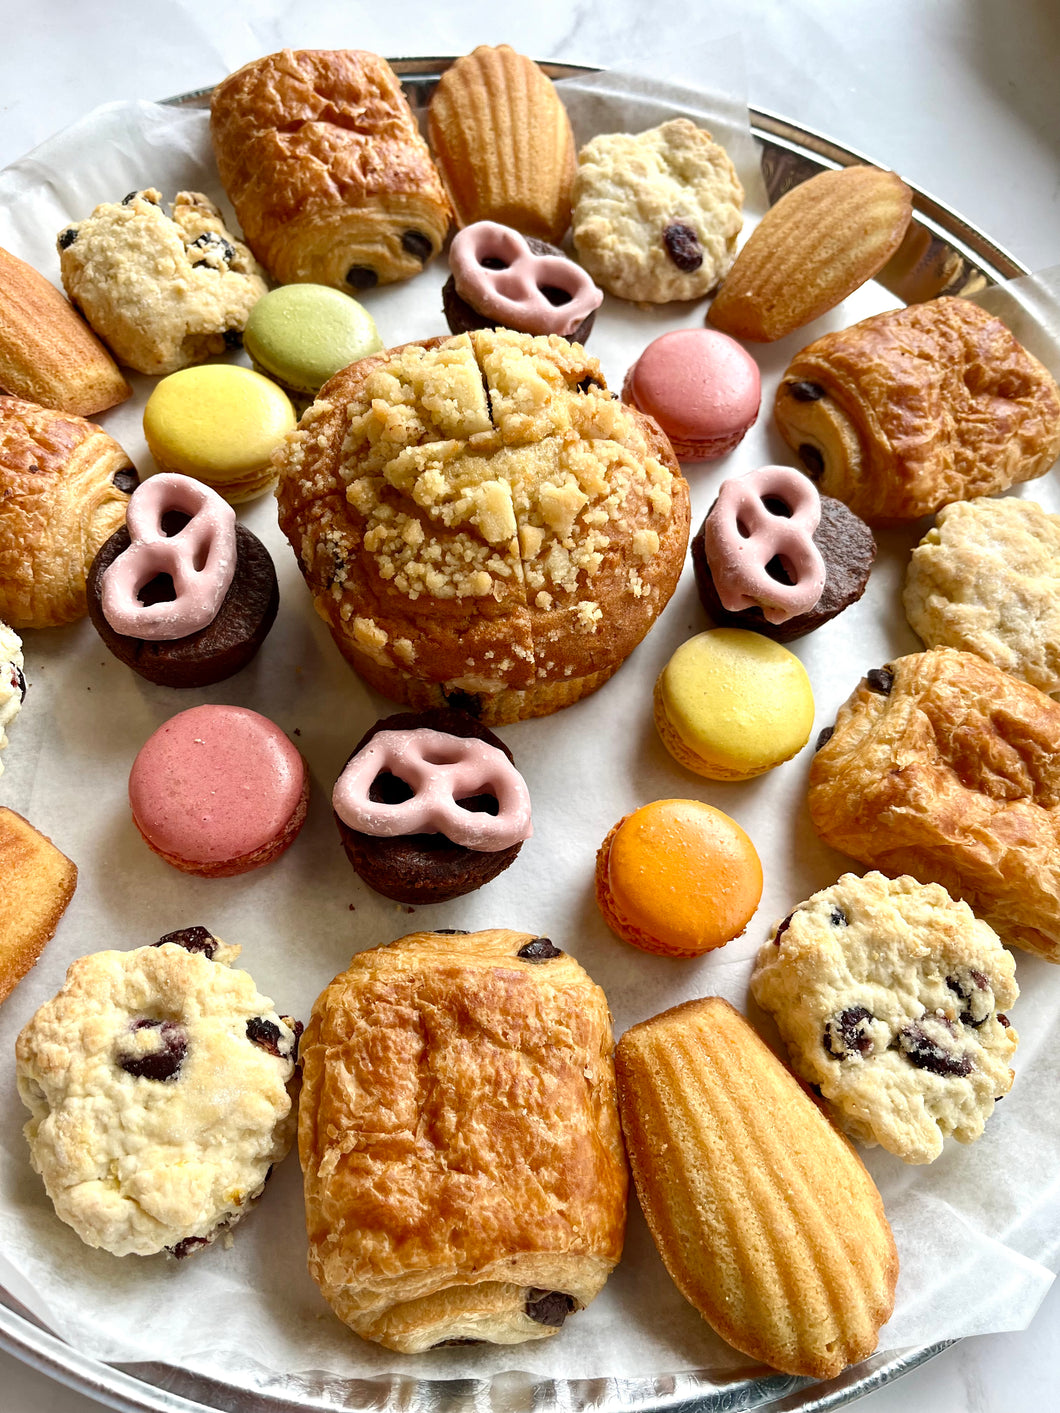 Assorted Pastries Platter